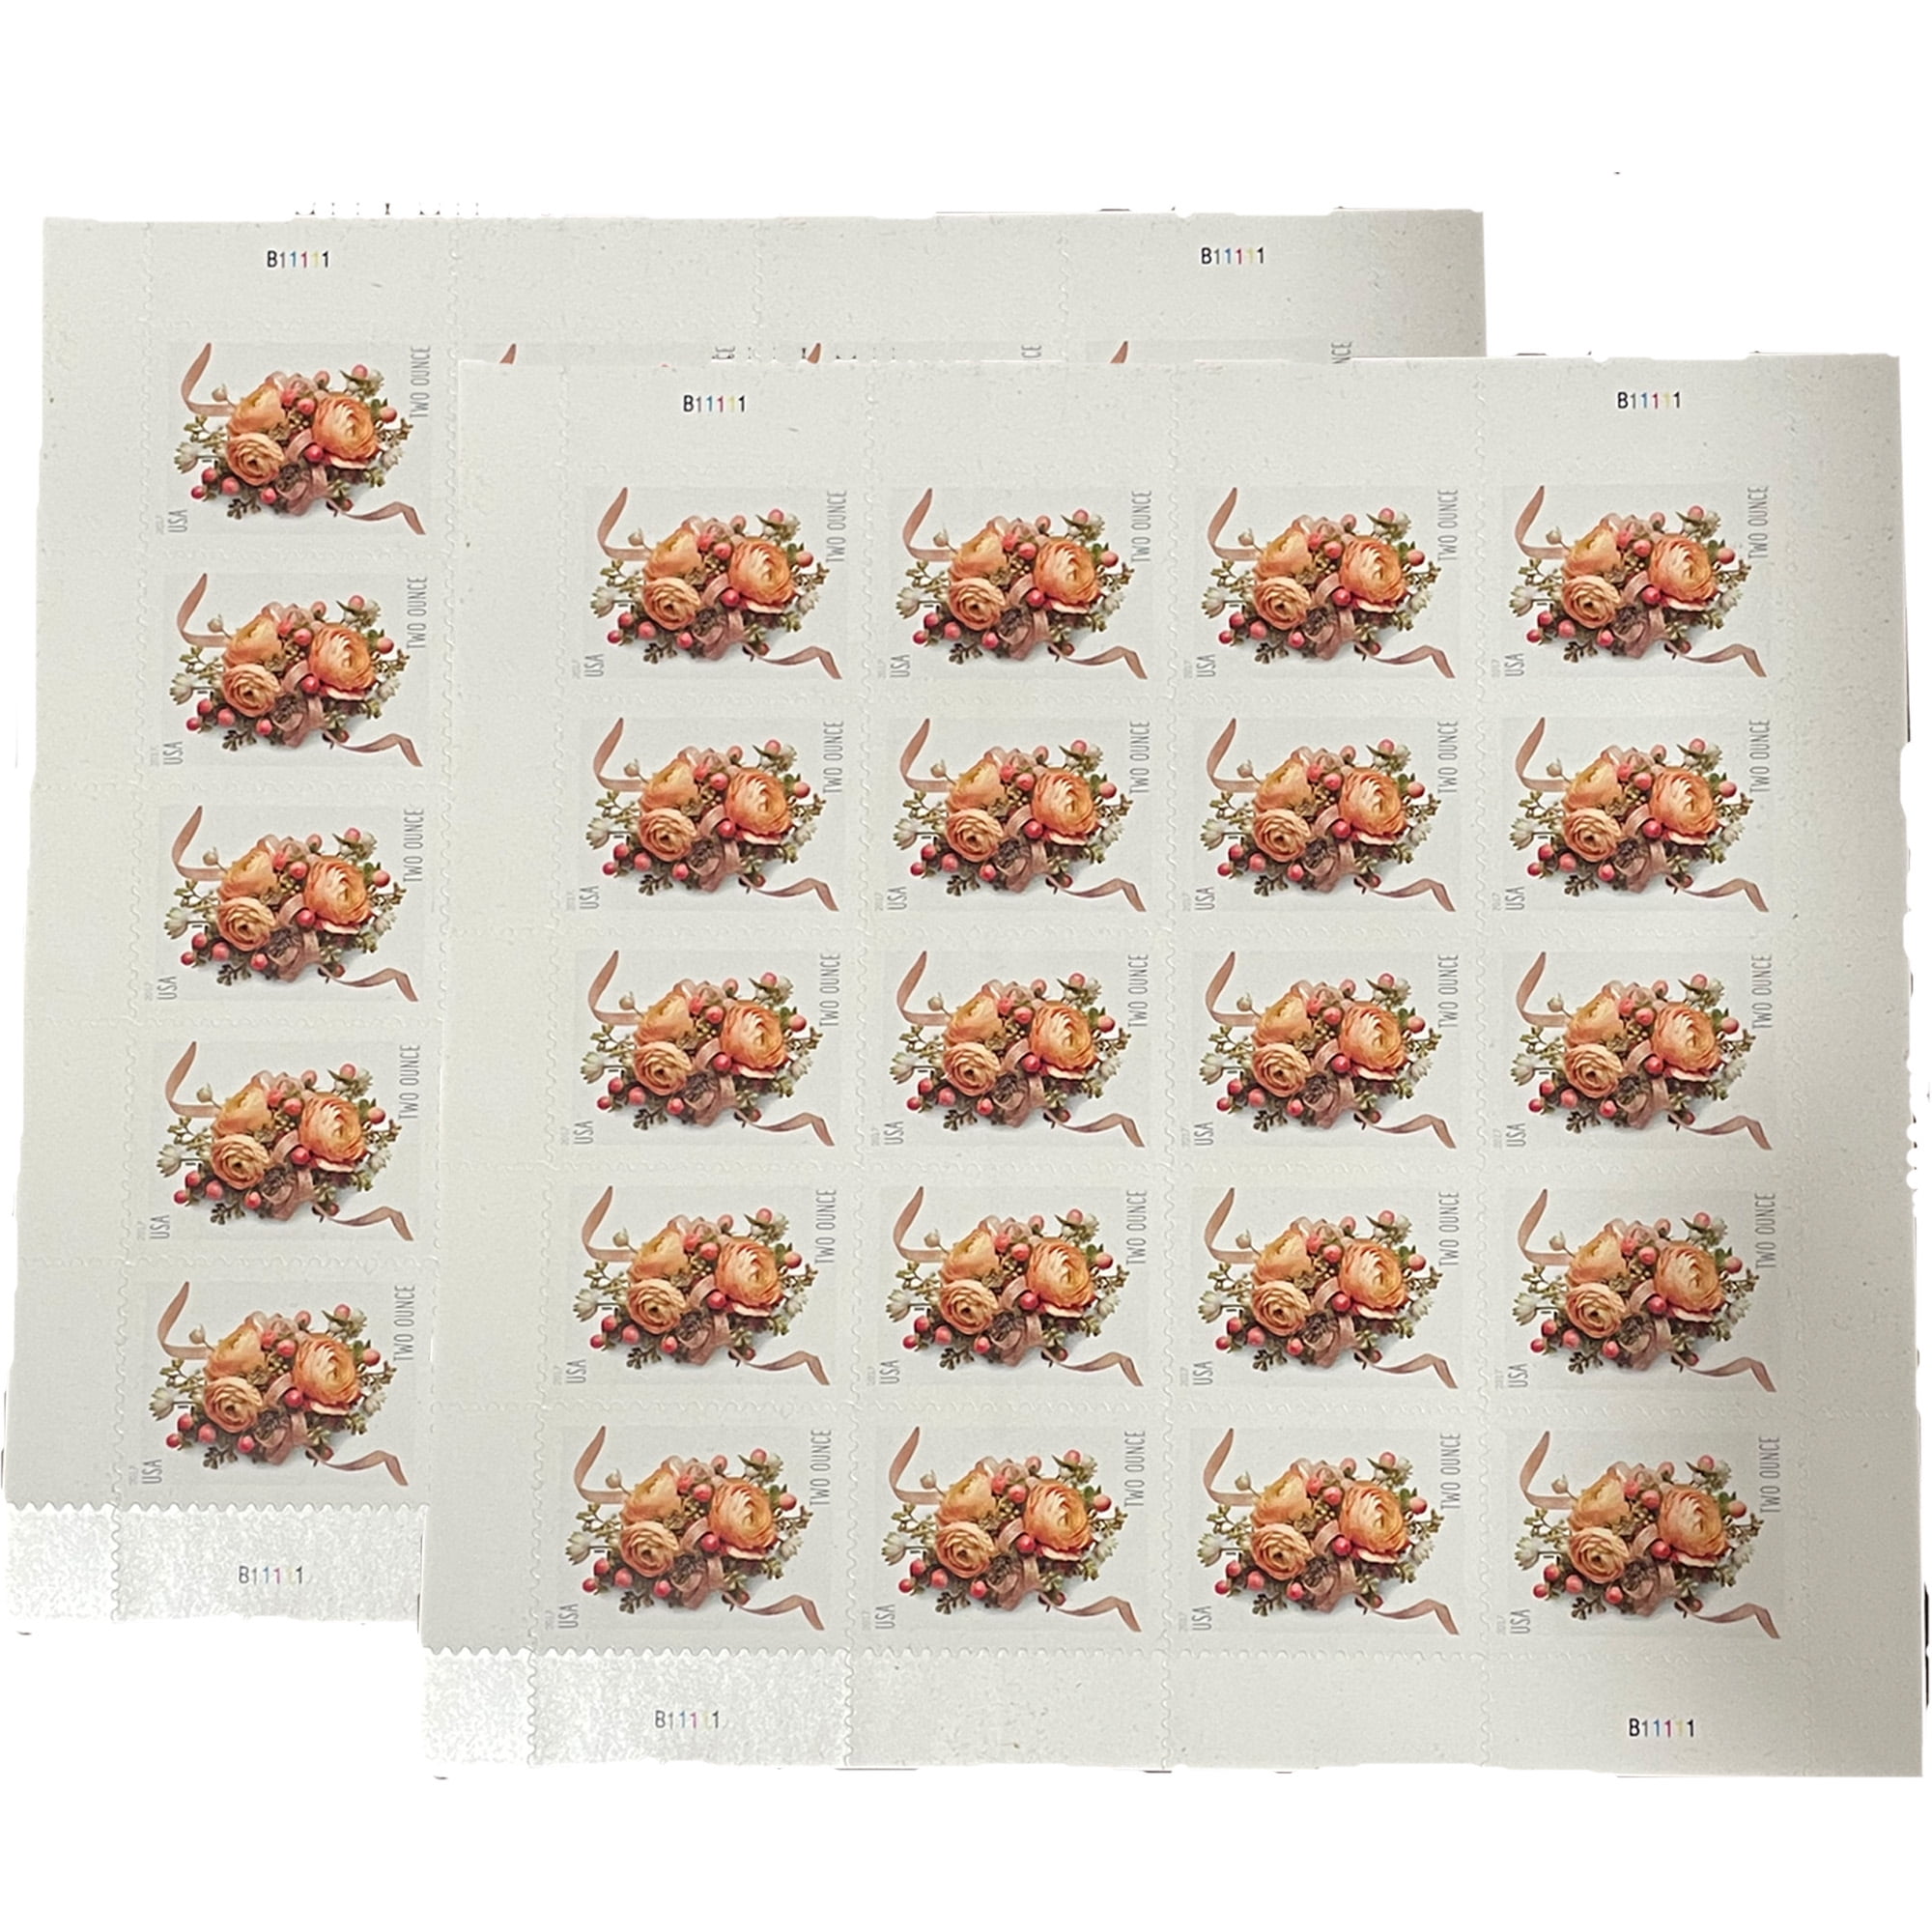 Wedding Postage Stamps